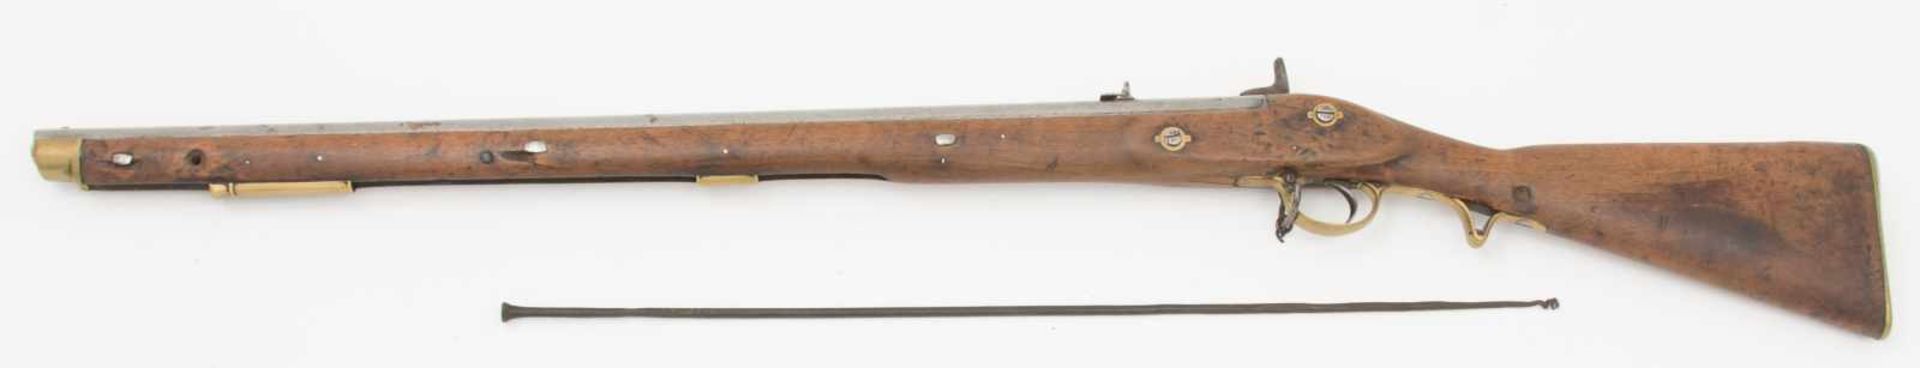 Enfield Rifle unbekanntes Modell England Mitte 19 Jh. - Bild 2 aus 8